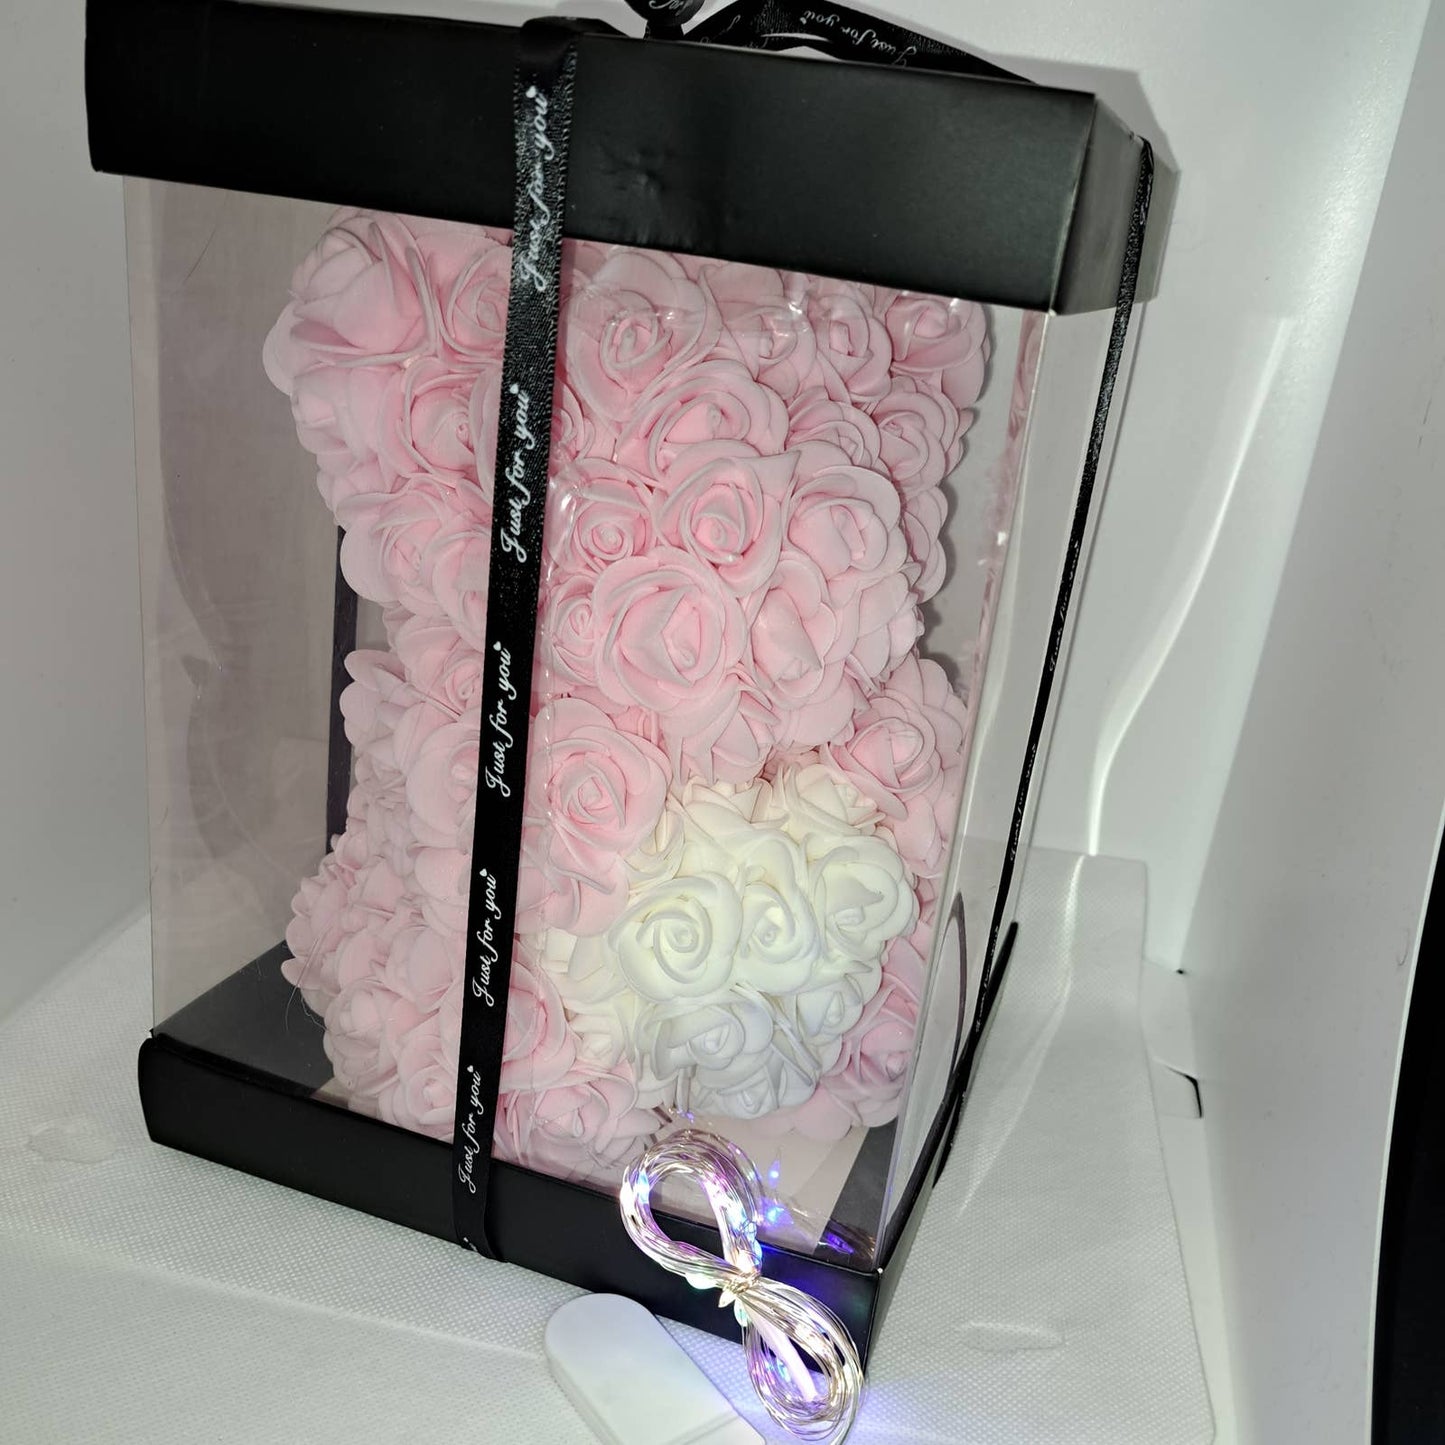 Handmade artificial rose bear pink with lights